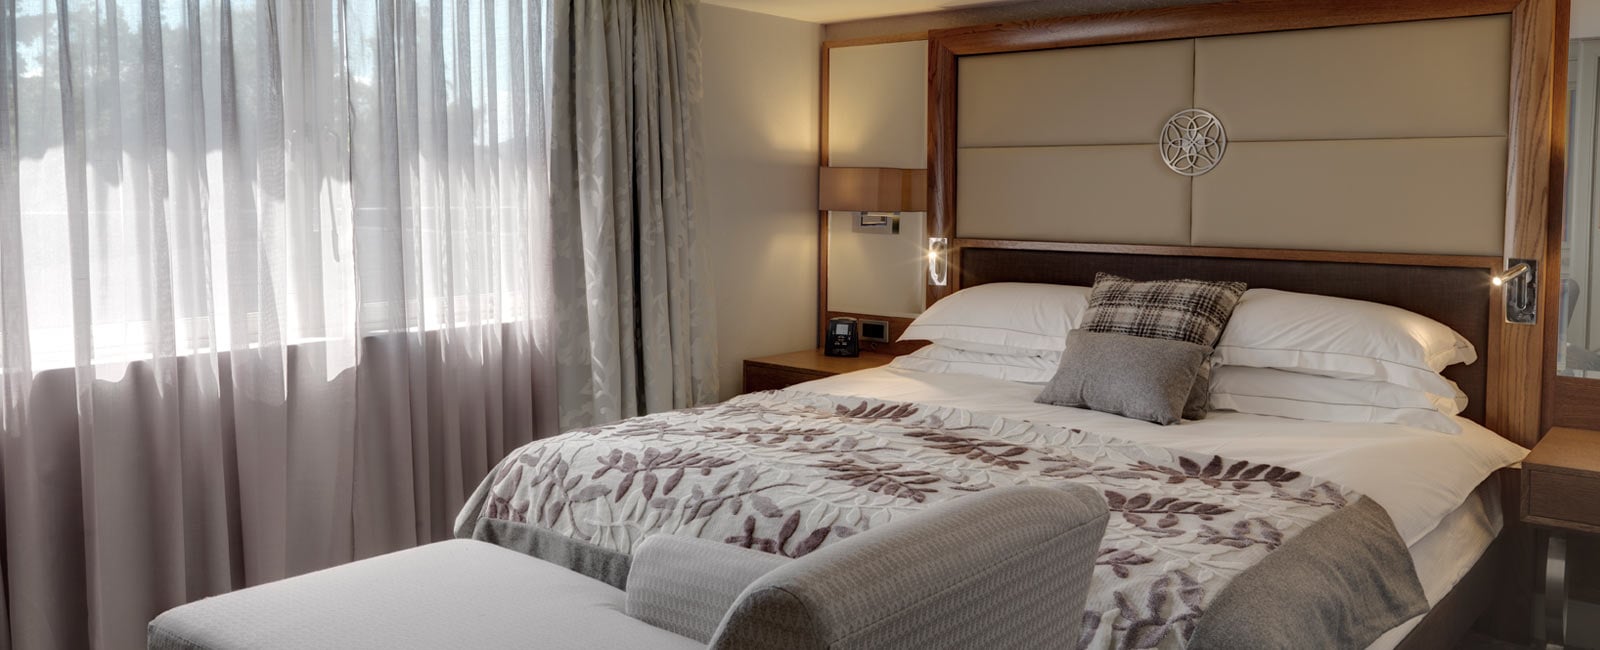 Bedroom at Hilton Grand Vacations Club at Craigendarroch Suites in Royal Deeside, Scotland